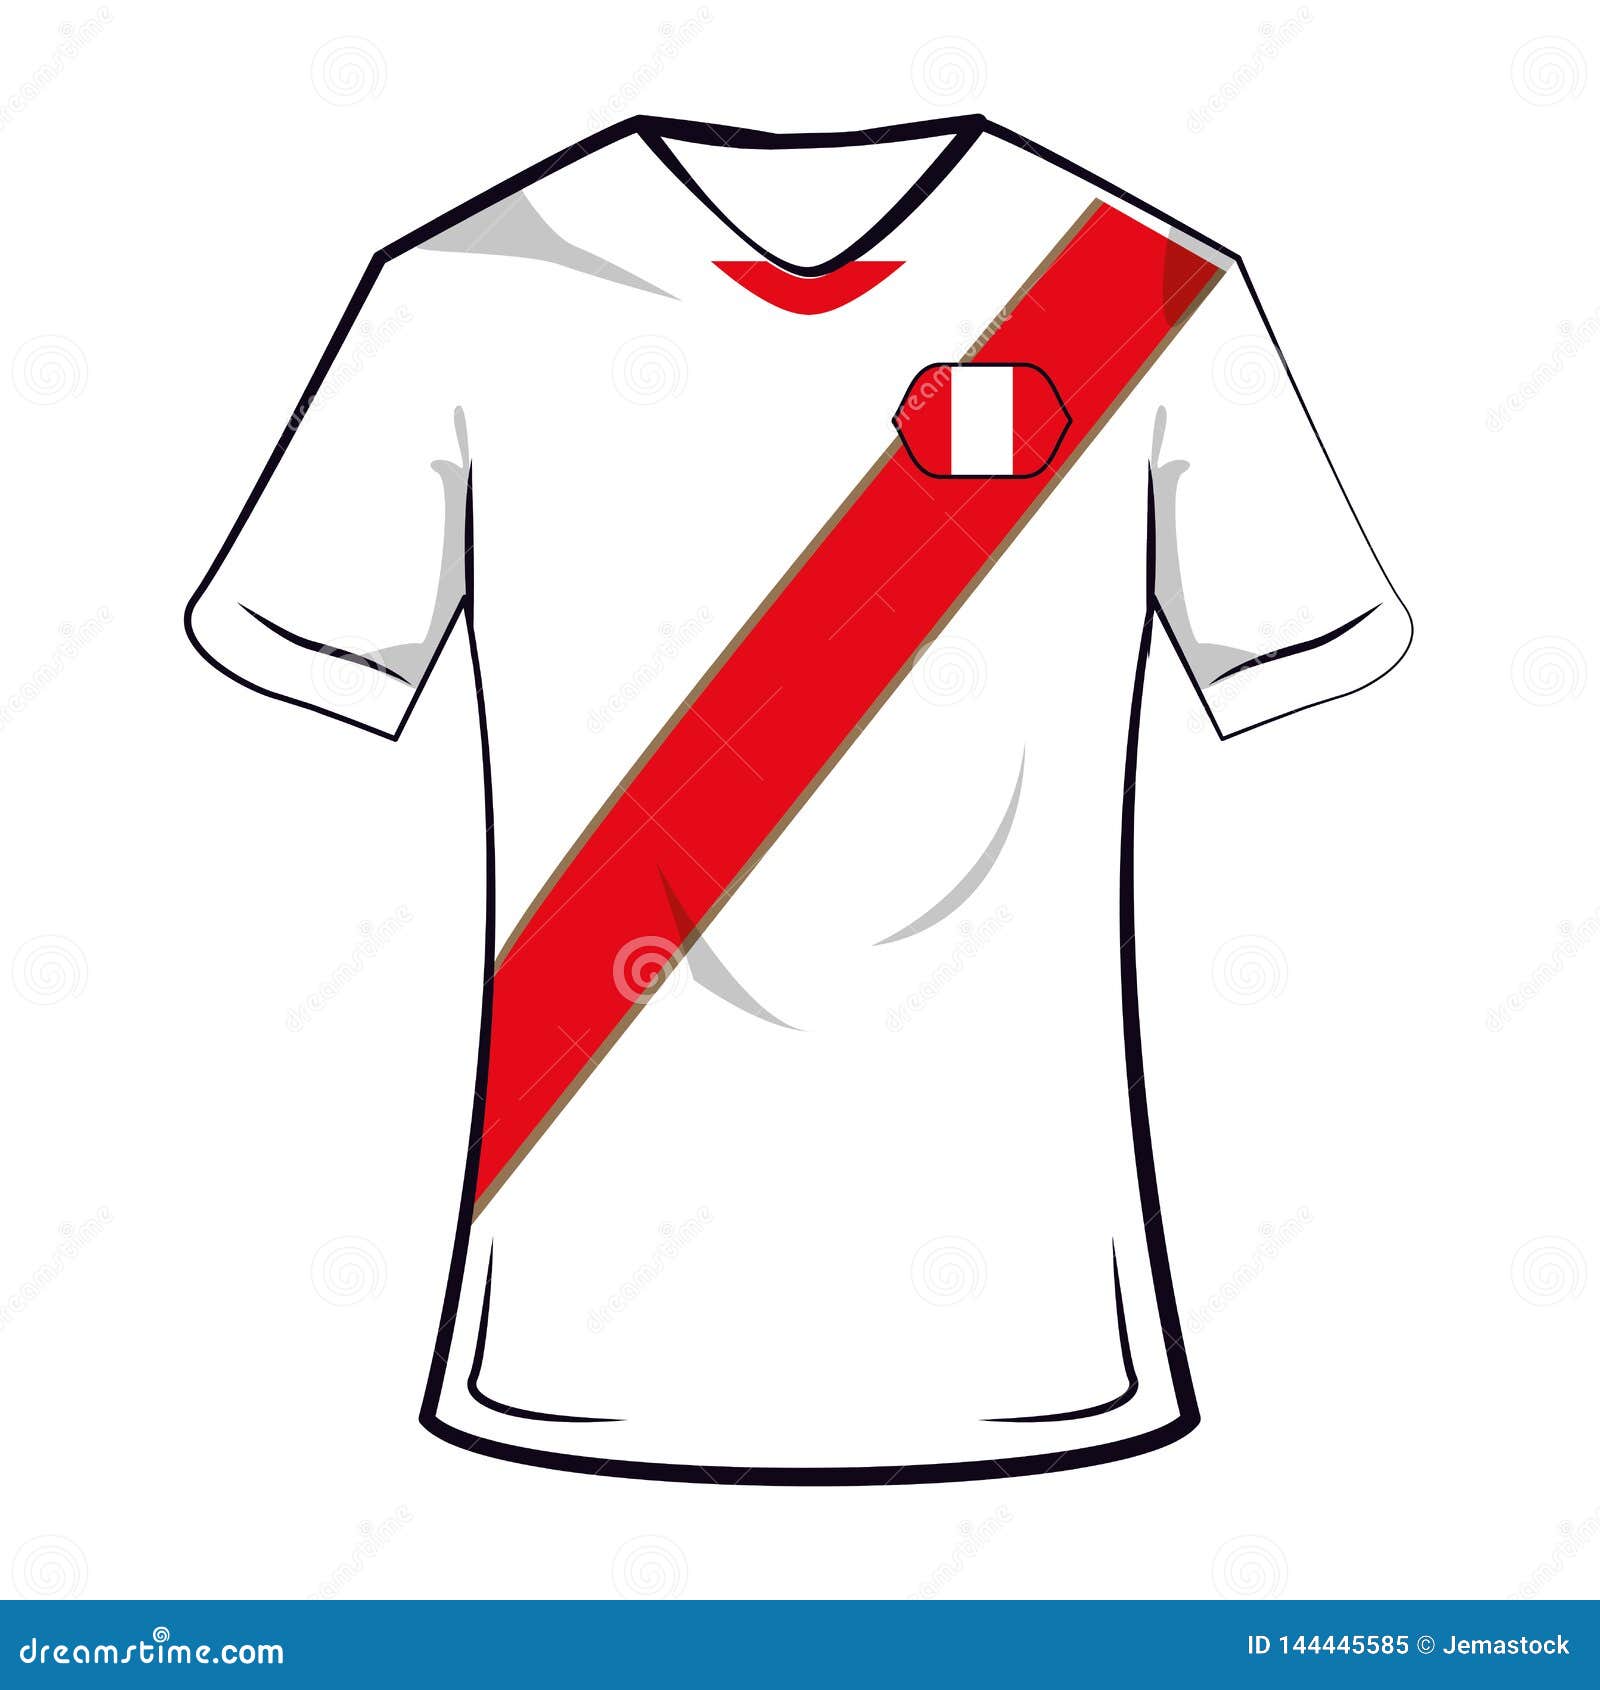 Peru Multicolor By Franelas CSS Camiseta de Peru Peruvian Gift Peruvian T-Shirt